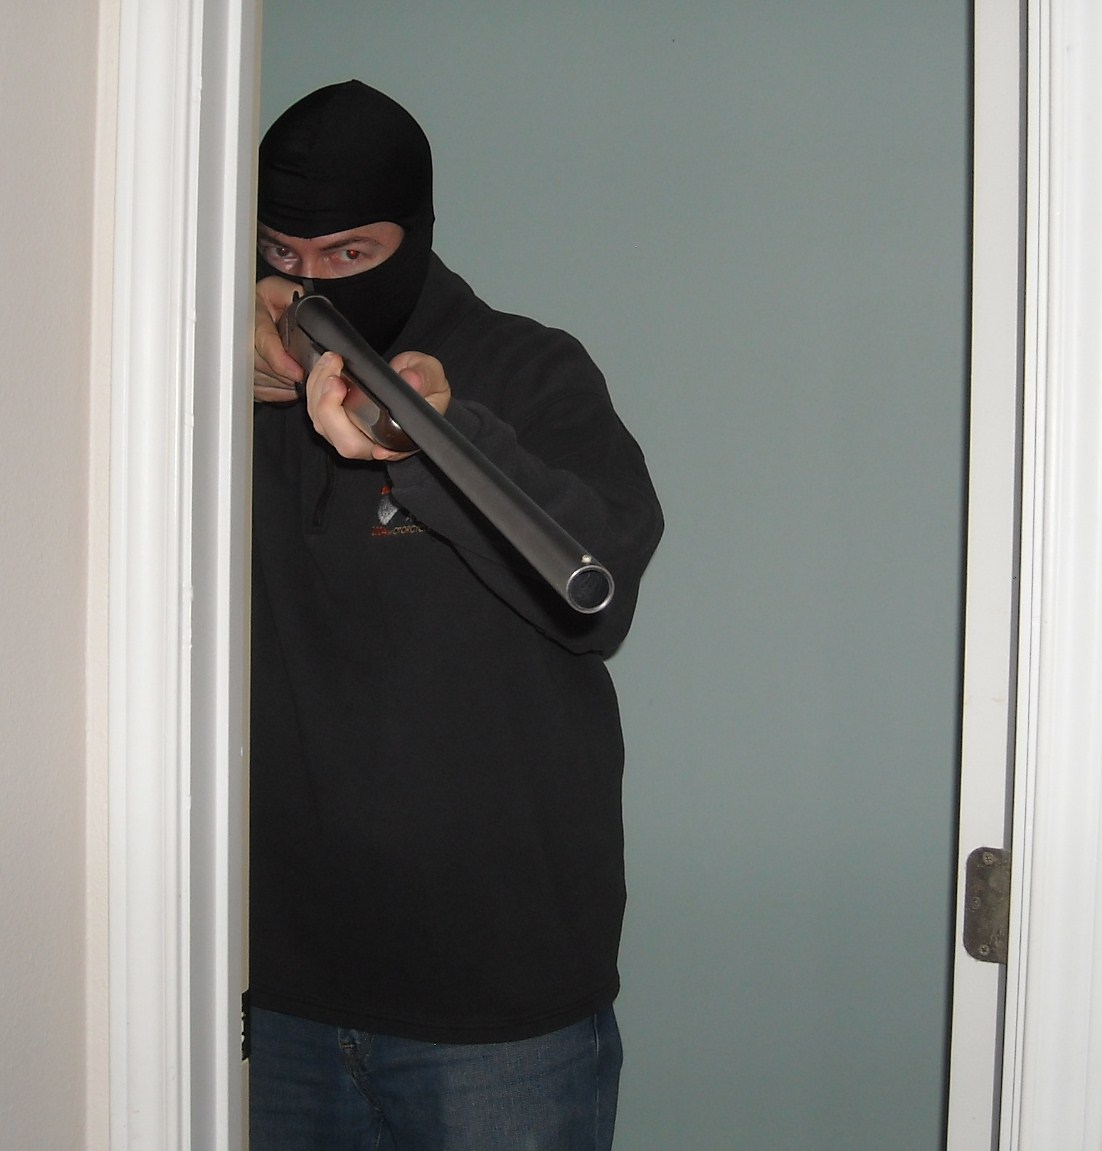 image of a burglar